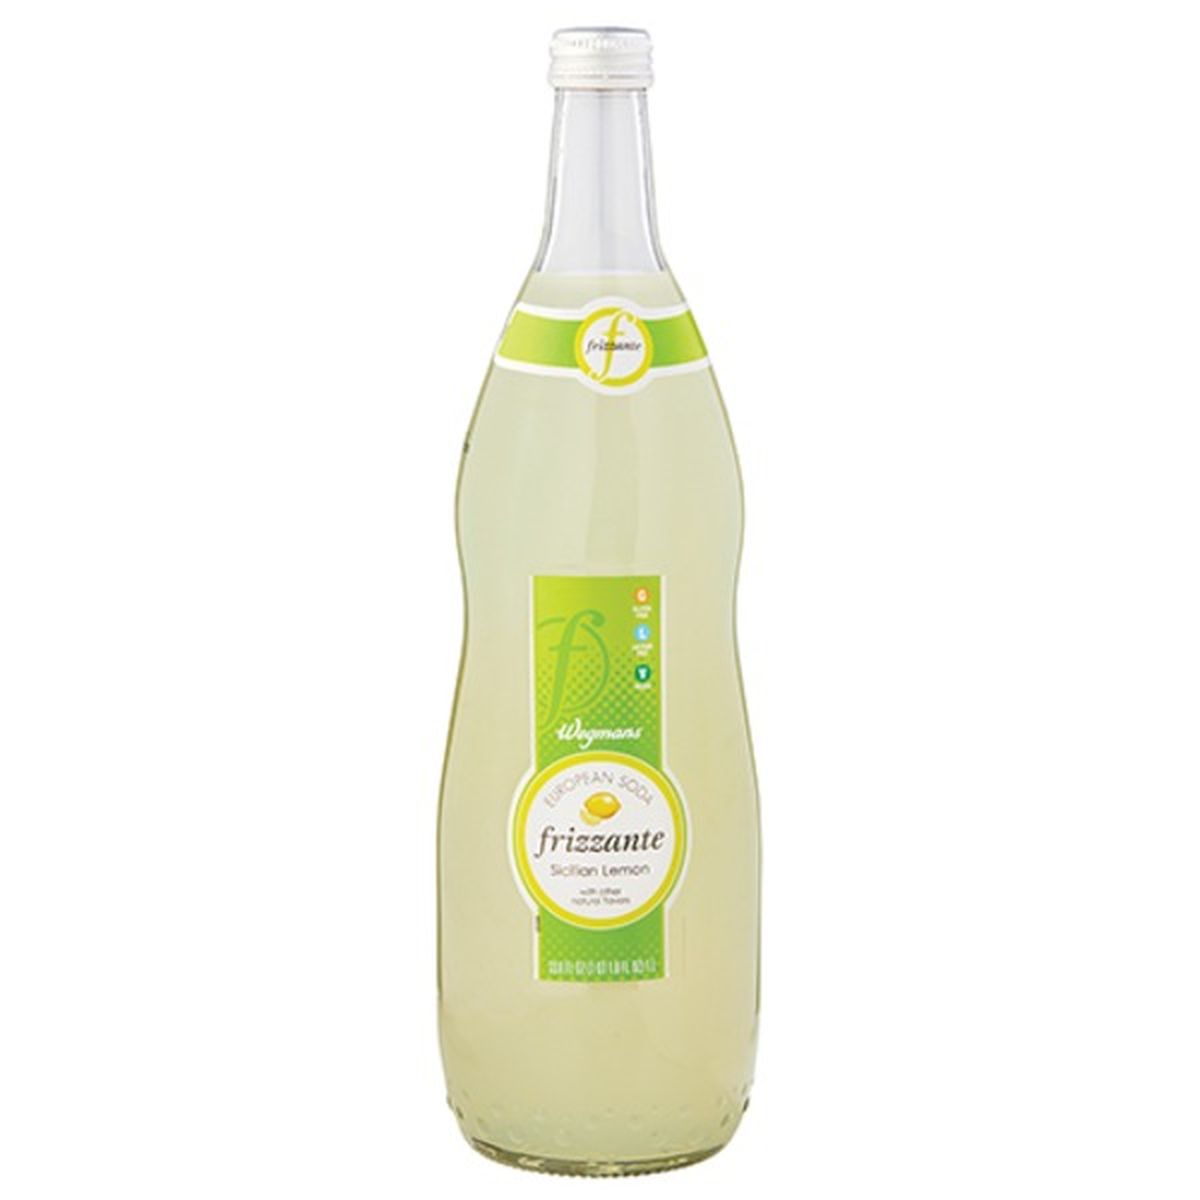 Calories in Wegmans Frizzante Sicilian Lemon European Soda